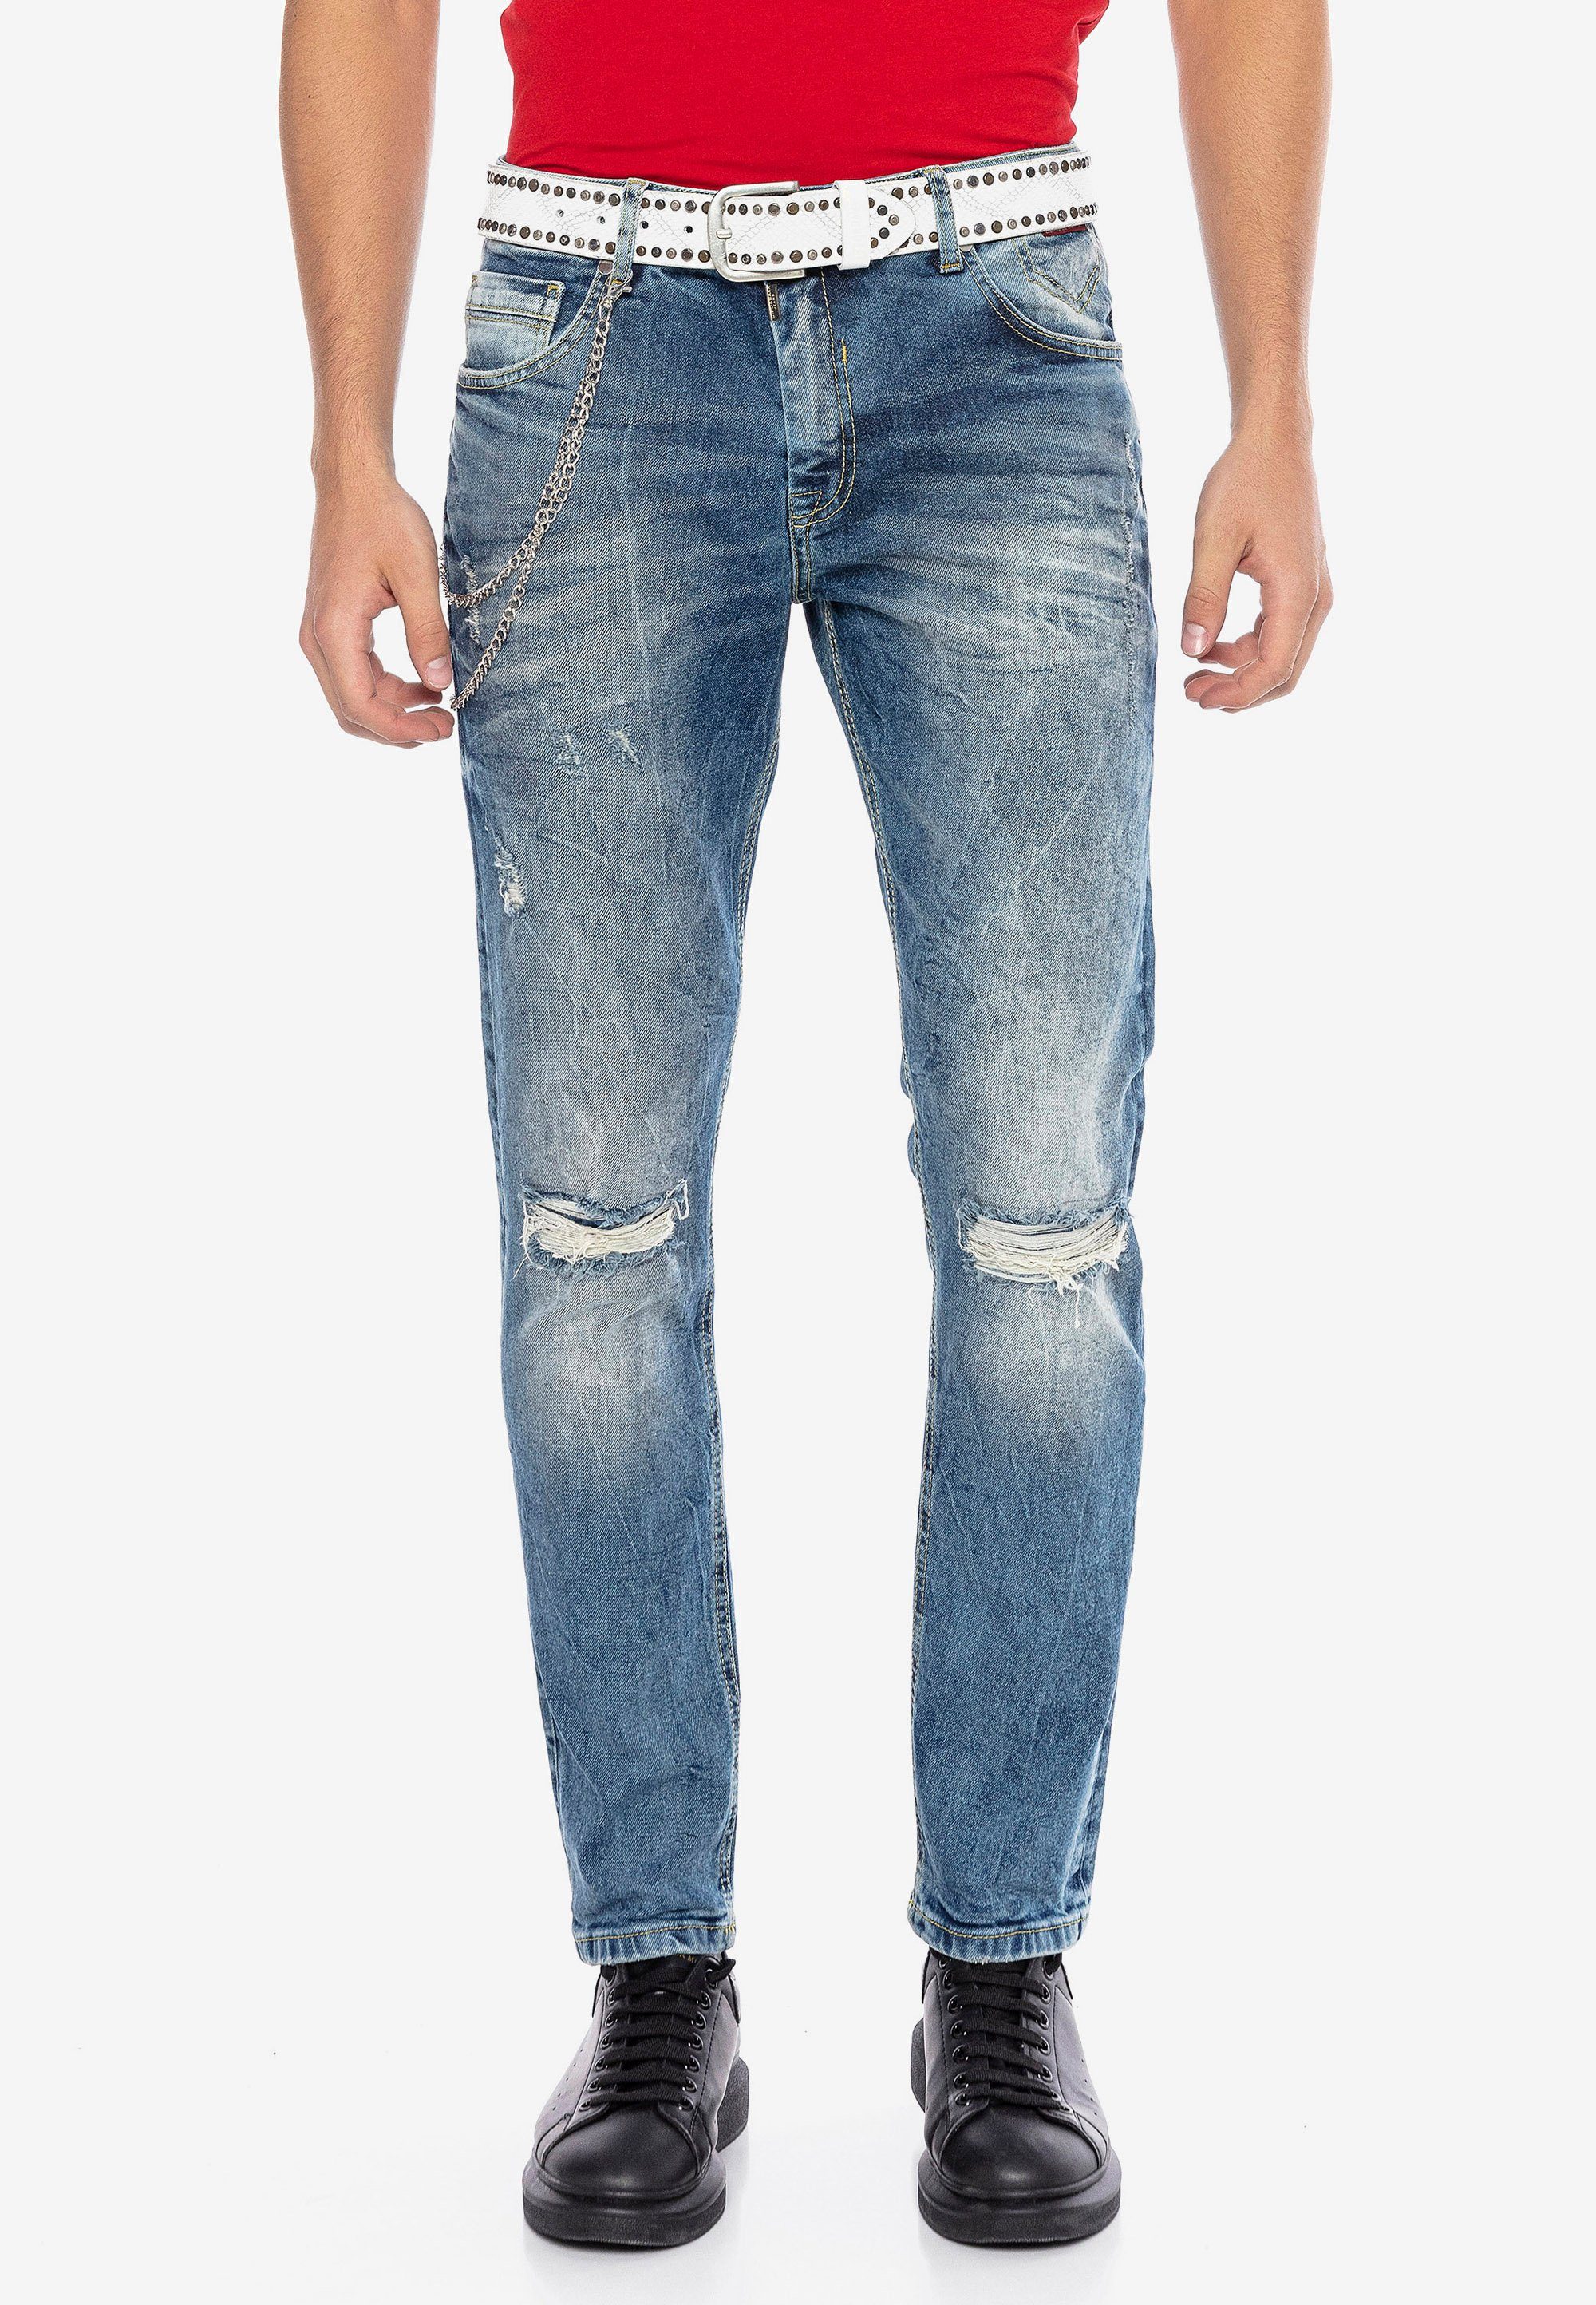 Herren Jeans Cipo & Baxx Bequeme Jeans im angesagten Used-Look in Slim Fit